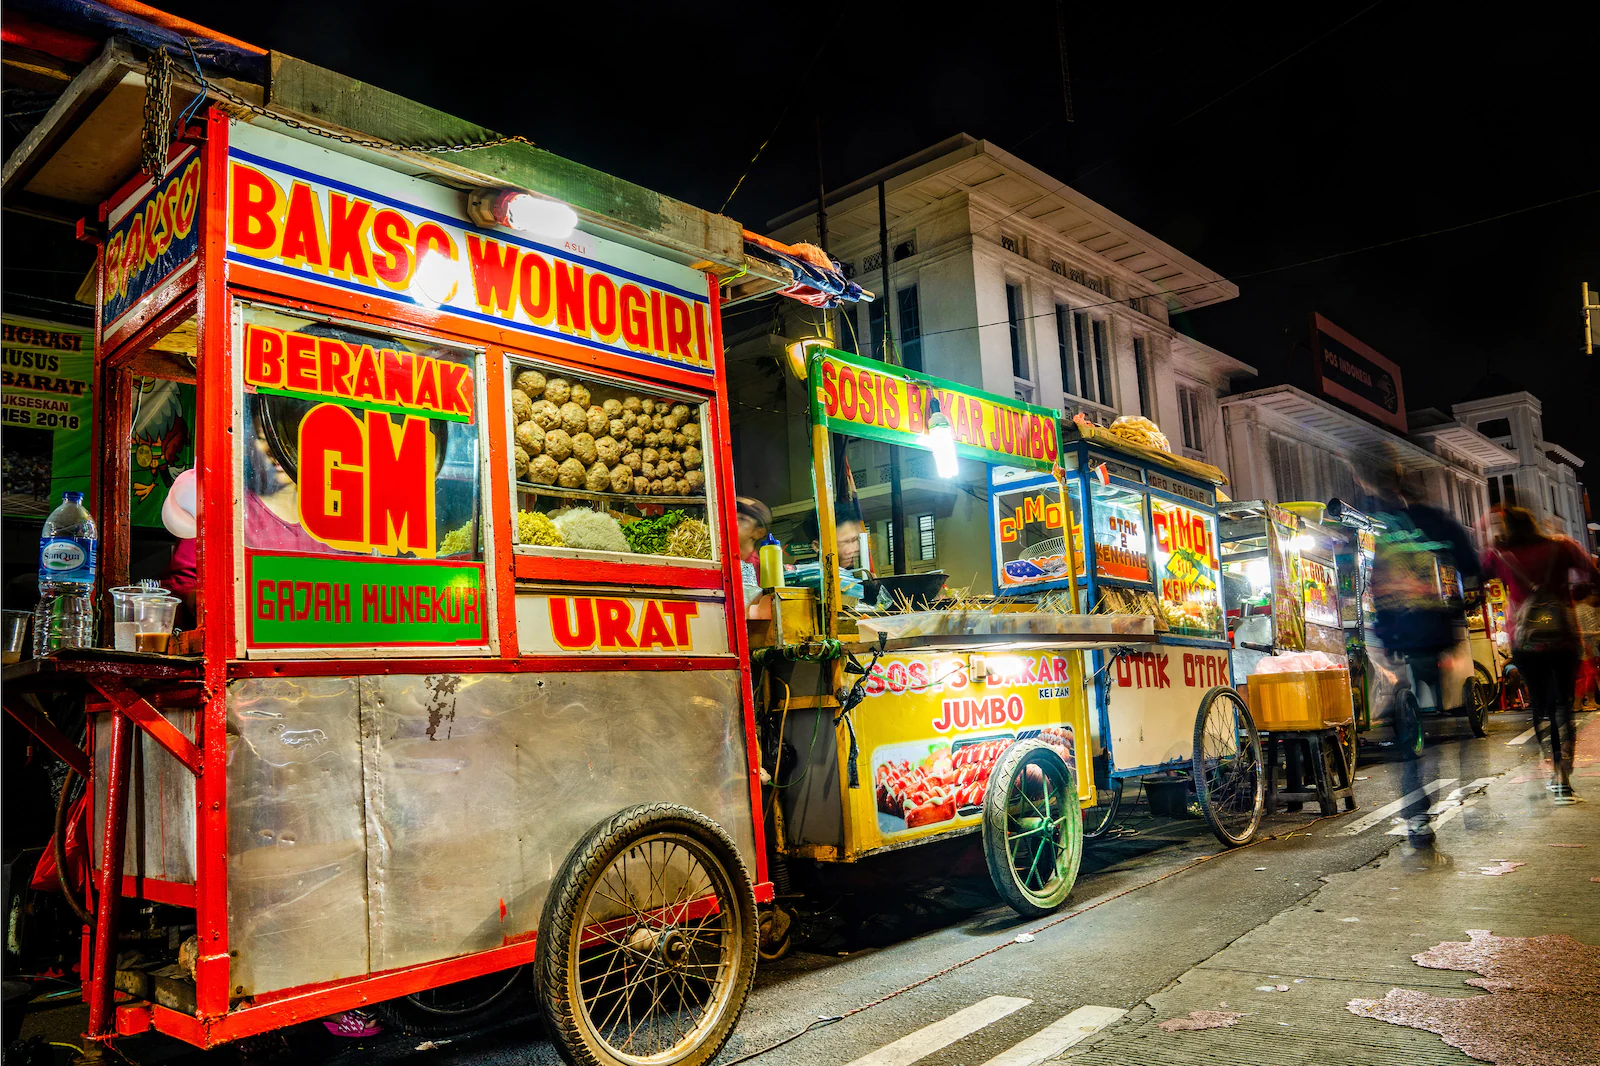 Gerobak food cart on the streets of Jakarta